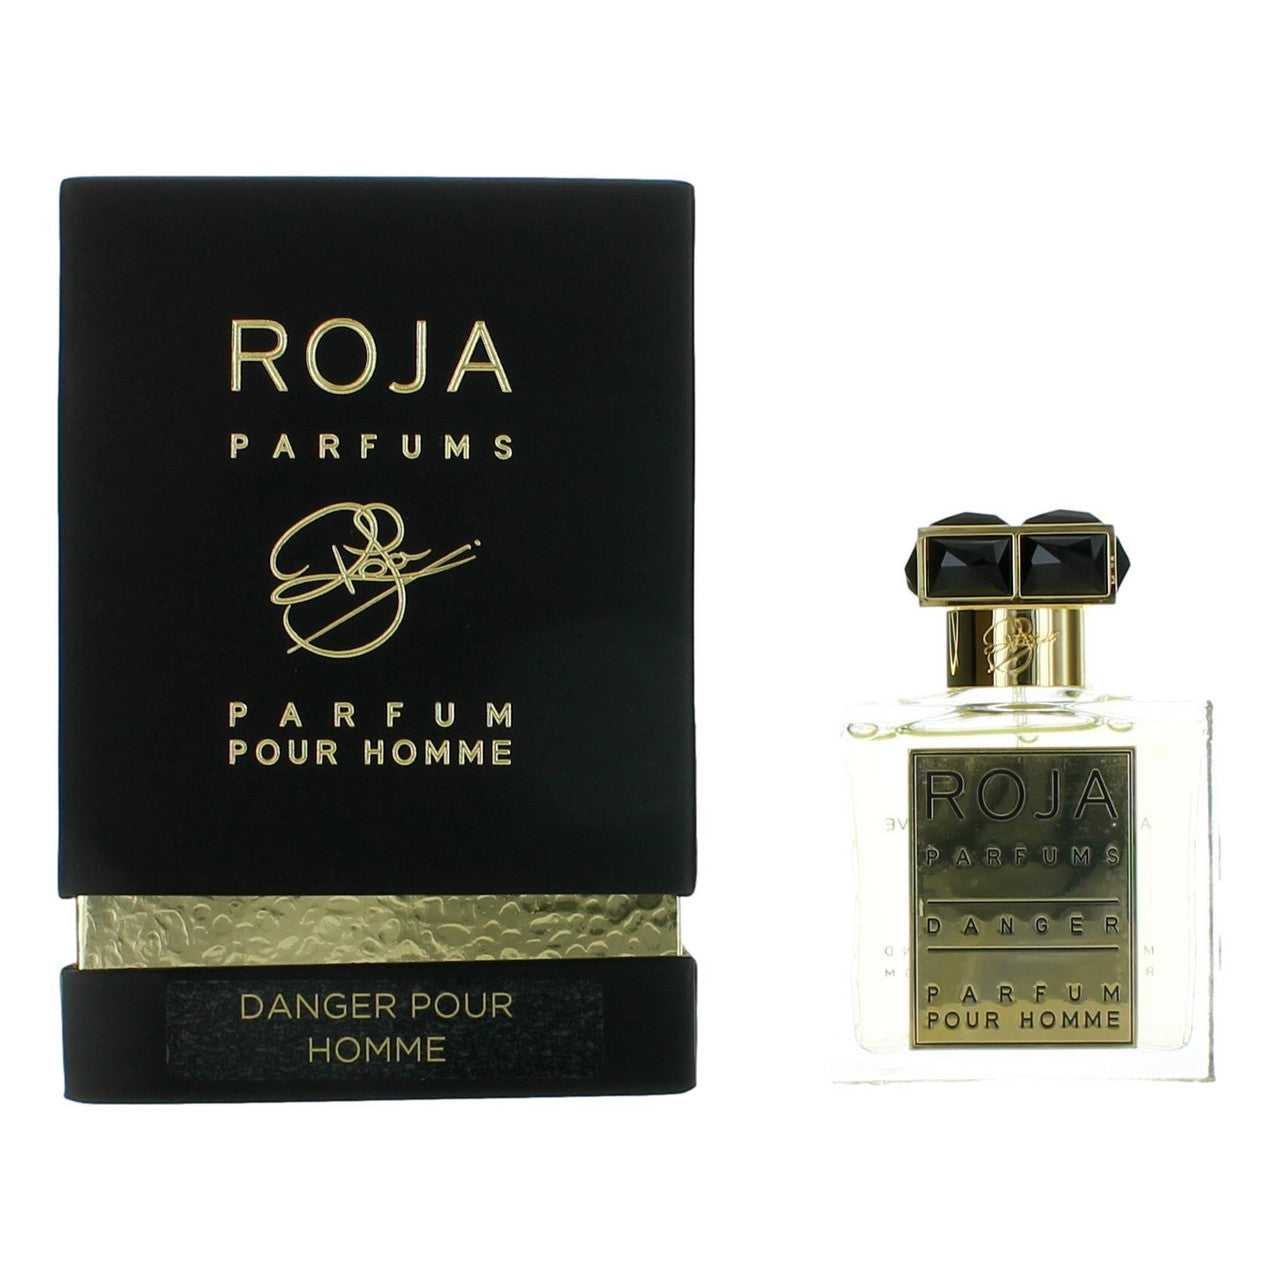 1.7 oz bottle of Danger Pour Homme by Roja Parfums